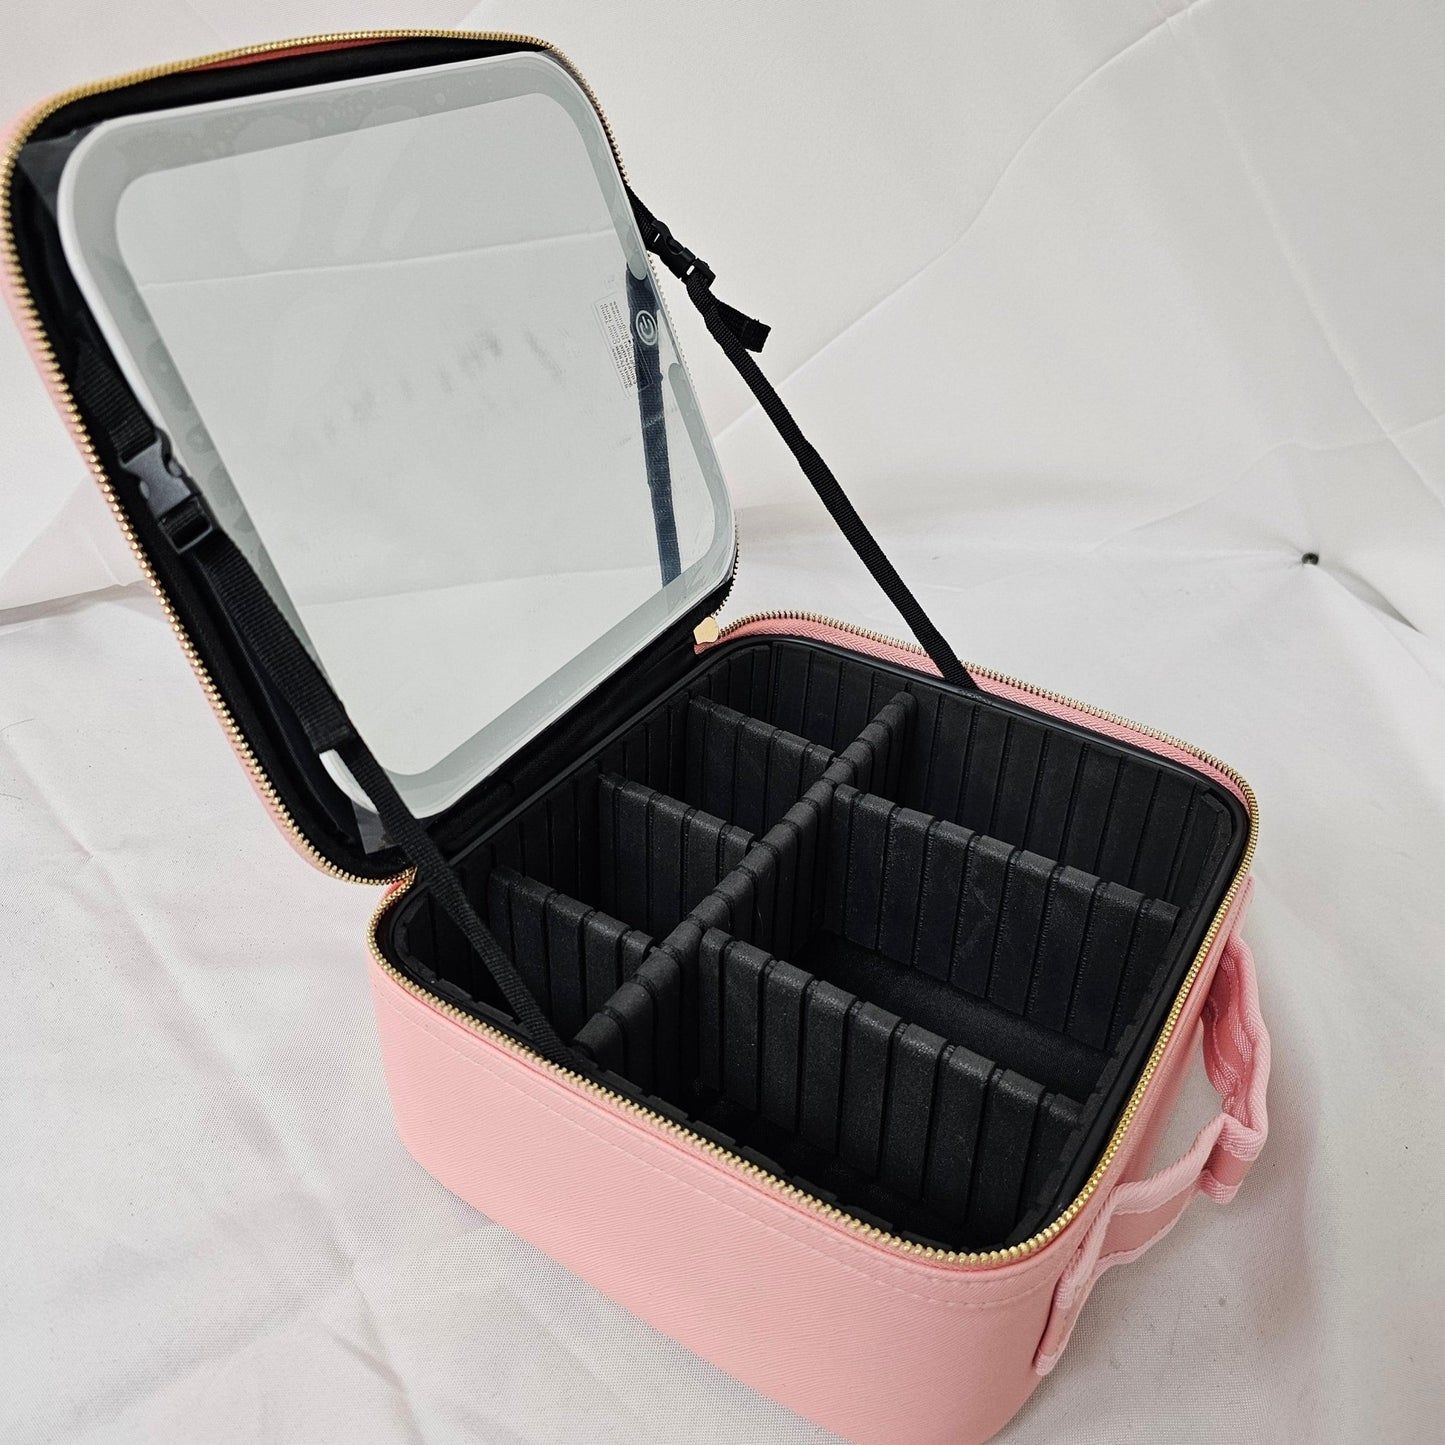 Travel Makeup Case Pink Light Up Mirror Momira - DQ Distribution